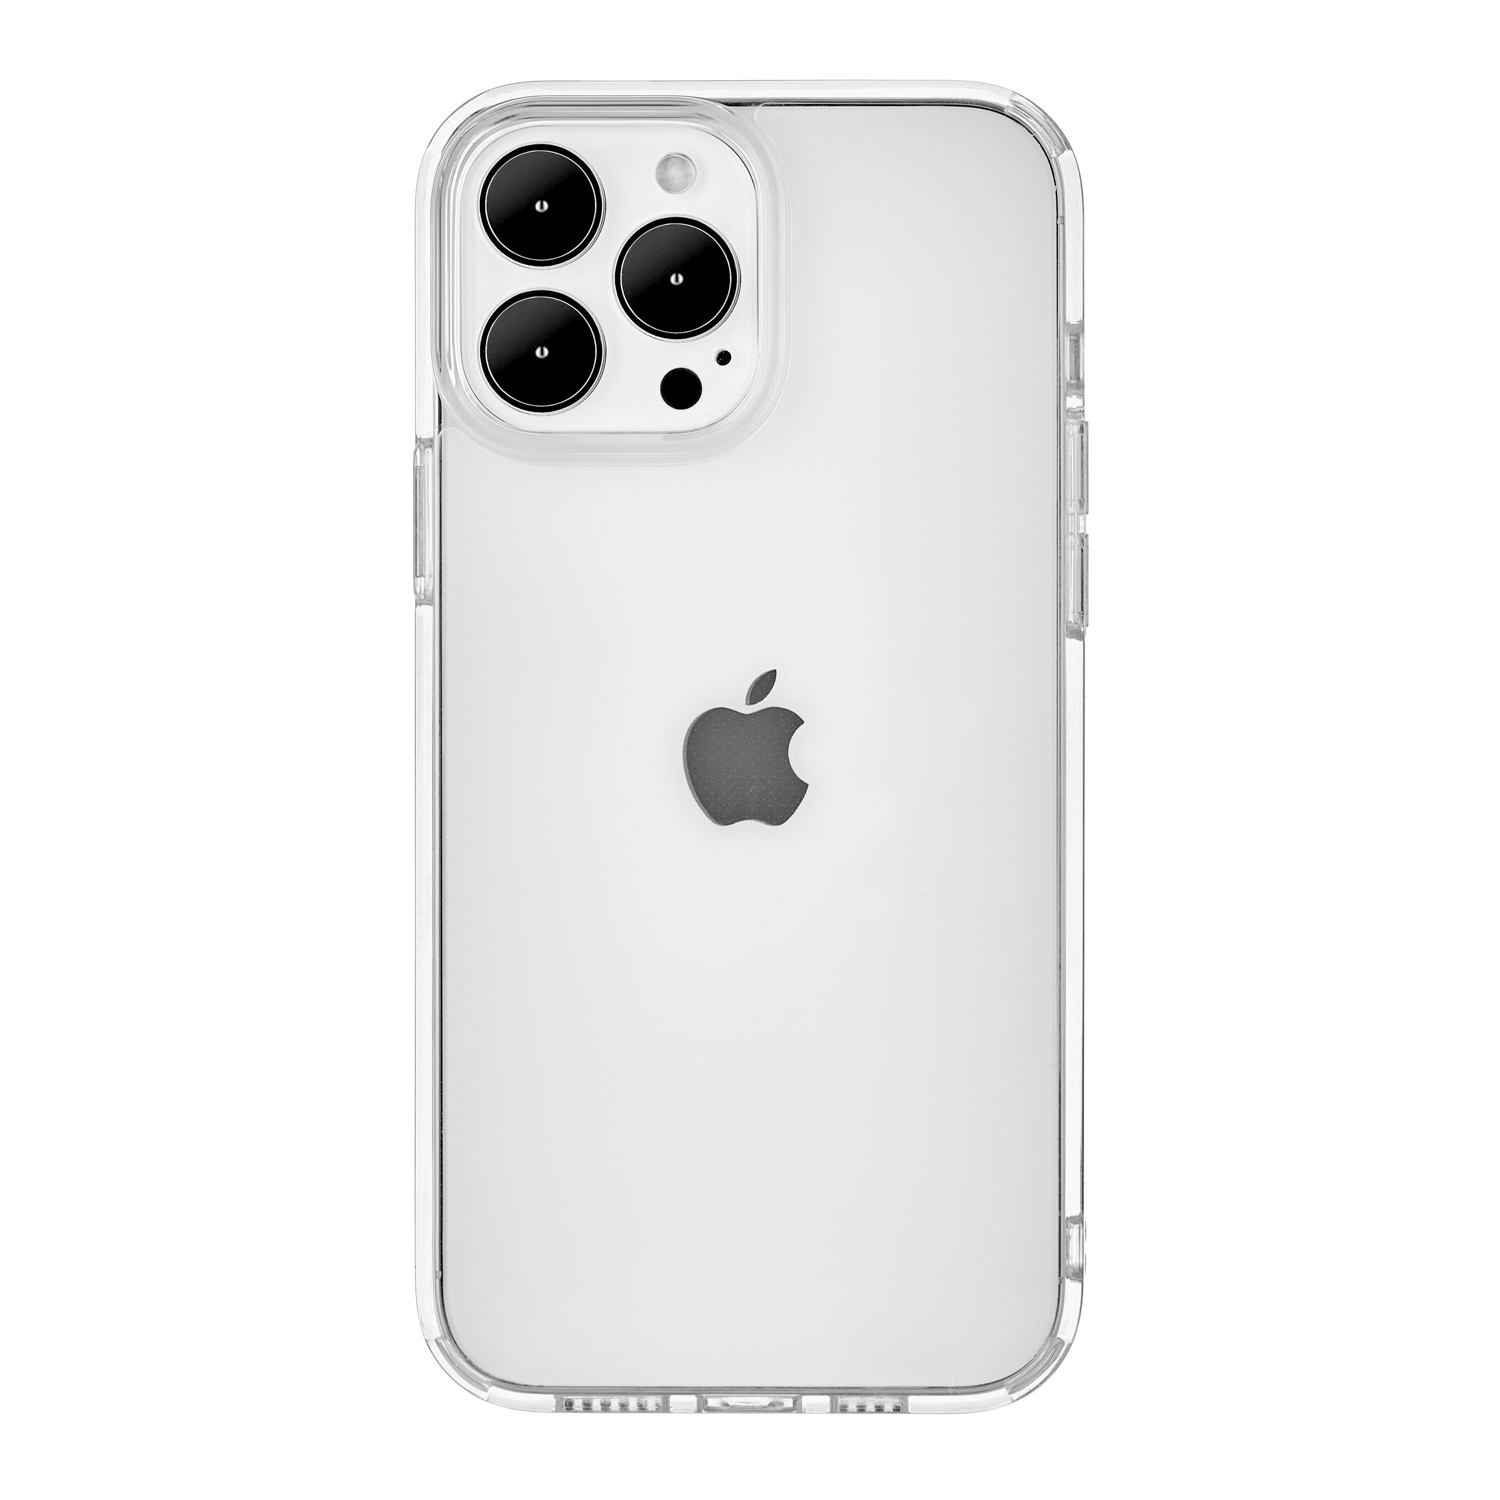 Real Case iPhone 13 Pro Max  transparent PC+TPU. Магнитная упаковка, прозрачный